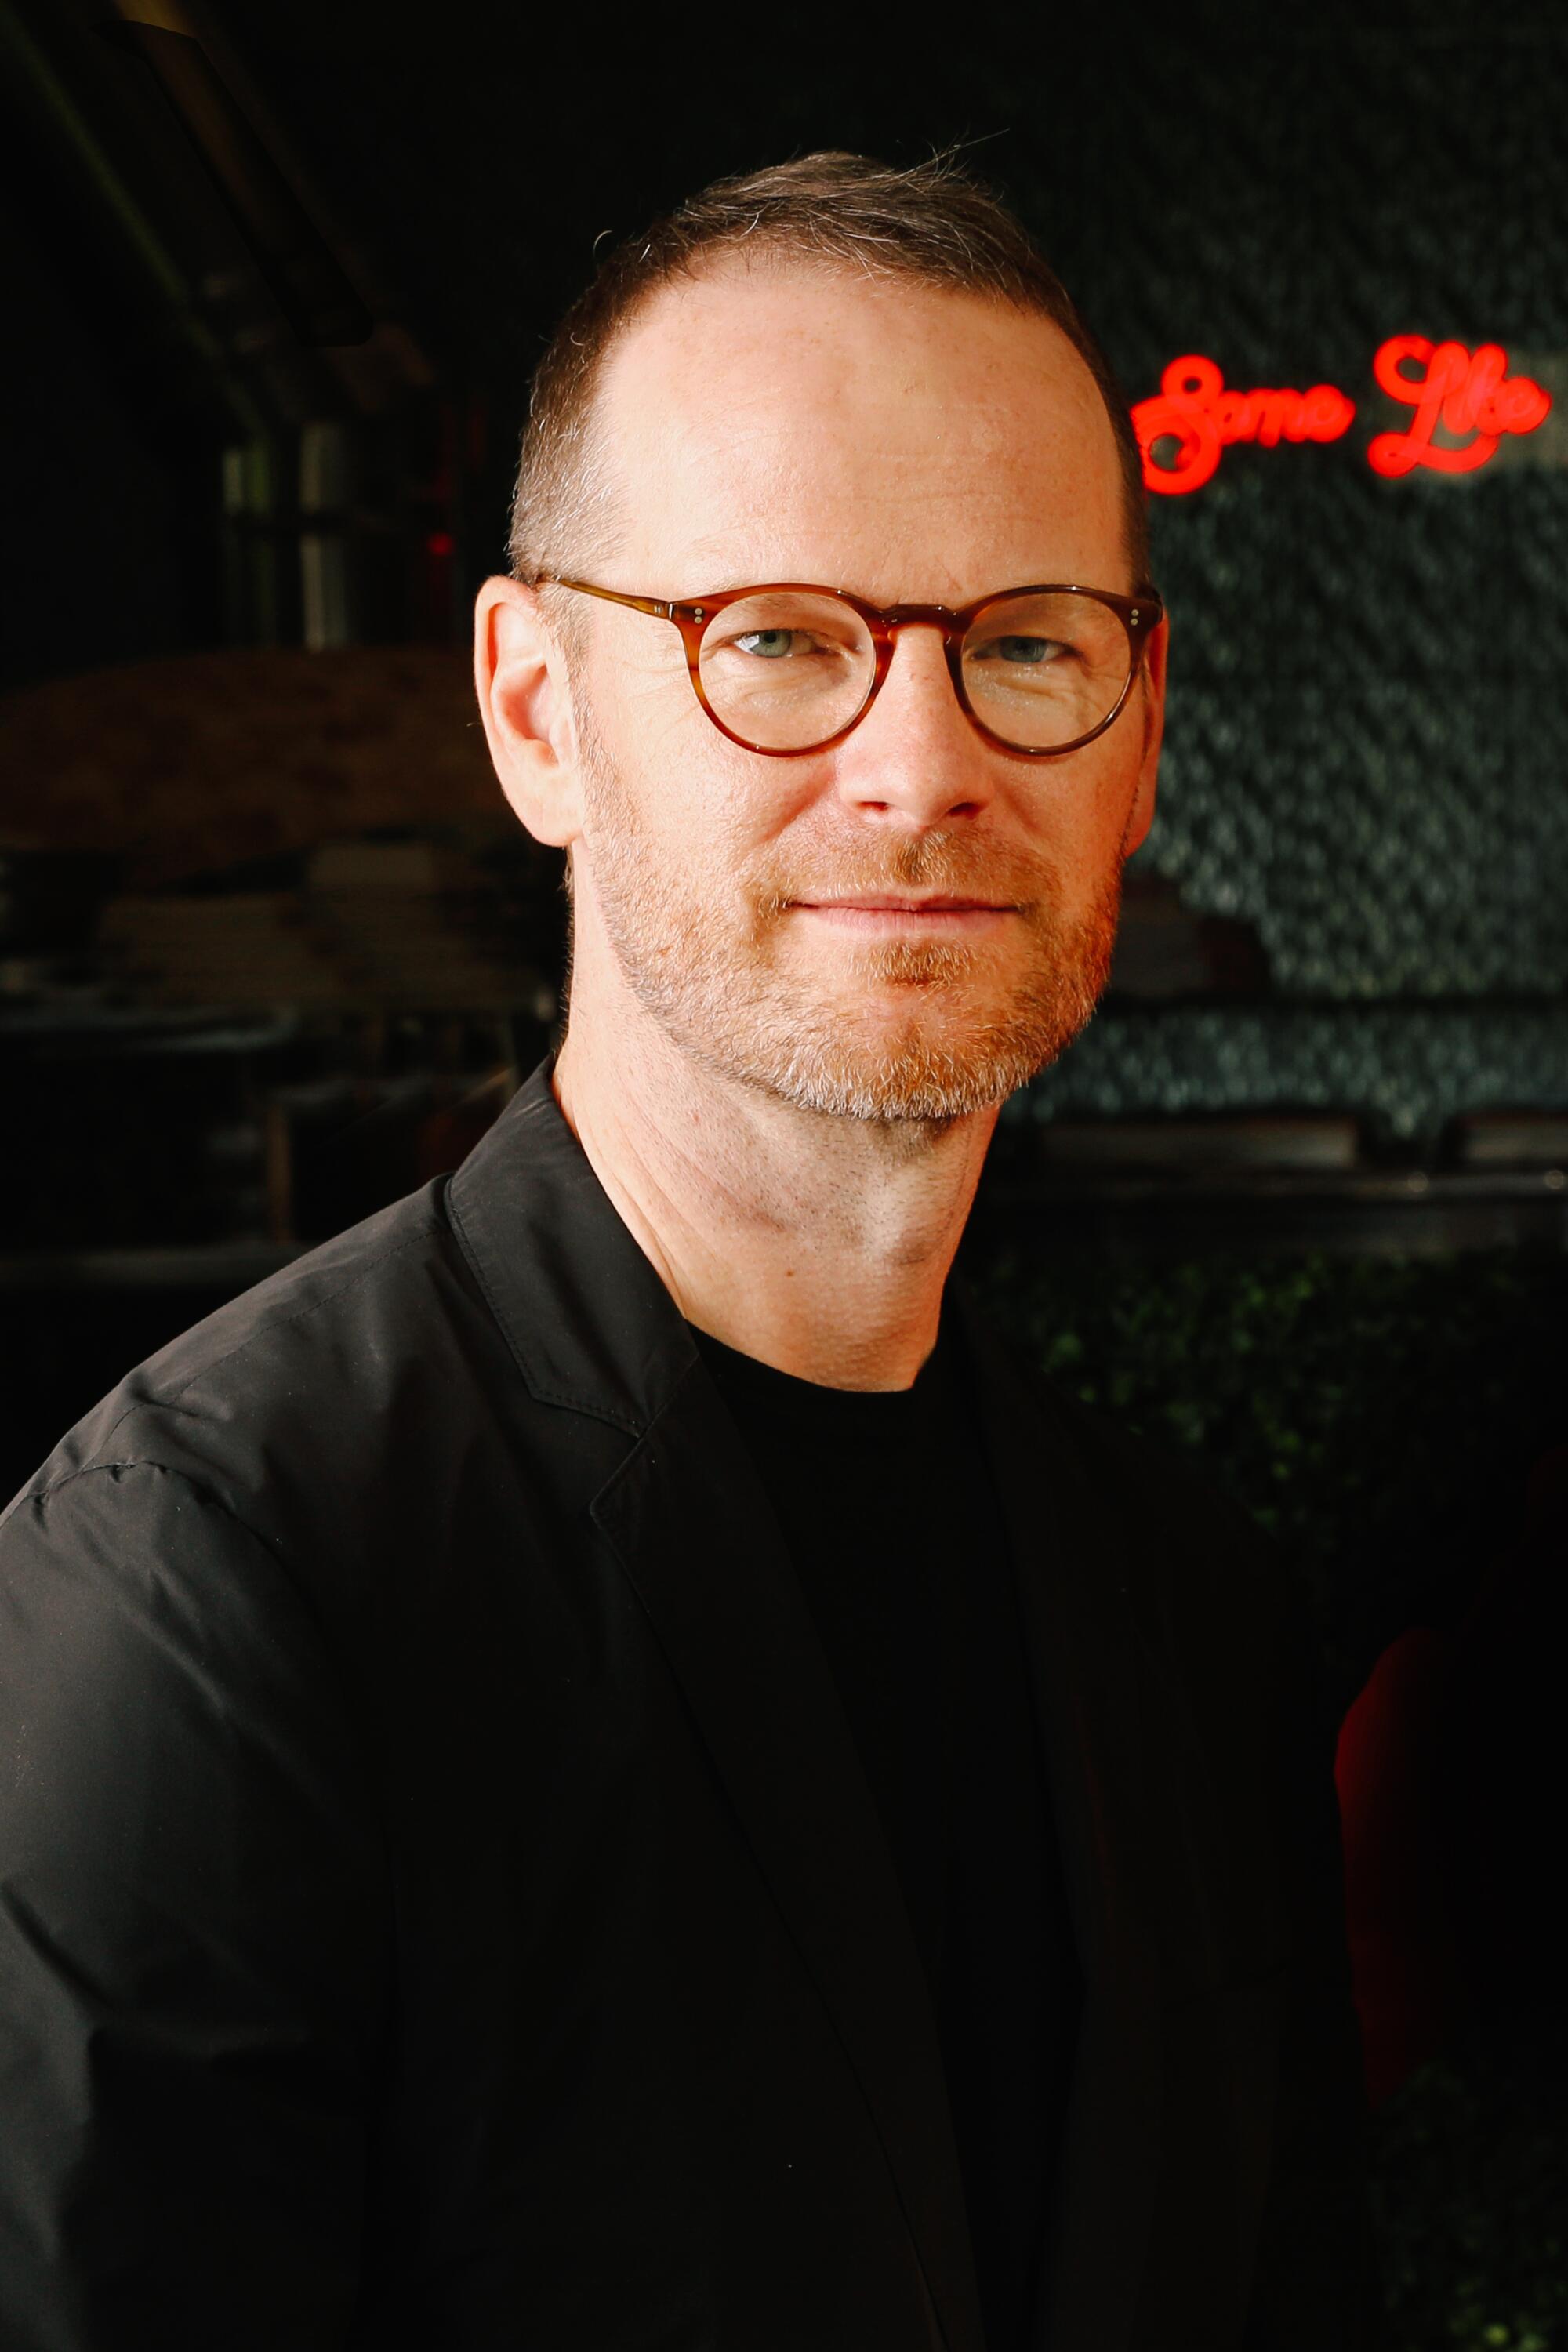 Filmmaker Joachim Trier, wearing glasses and a black shirt.